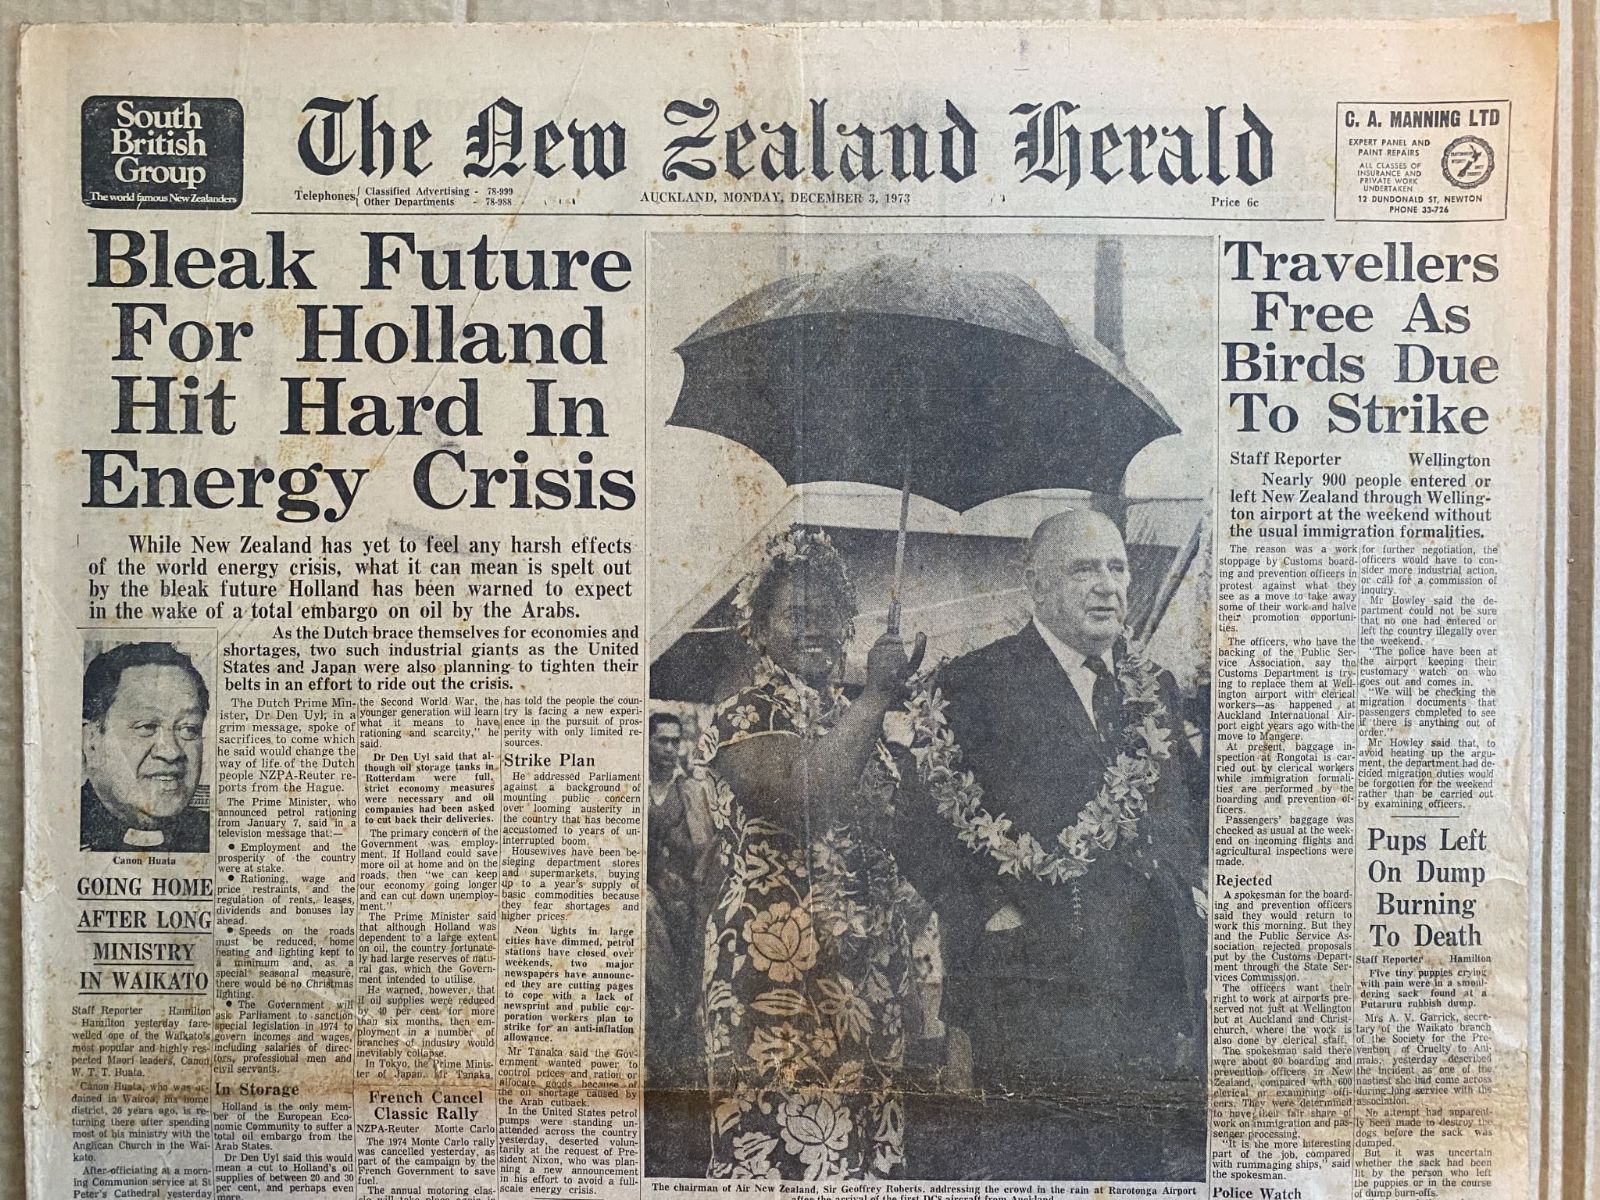 OLD NEWSPAPER: The New Zealand Herald, 3 December 1973 - Energy crisis